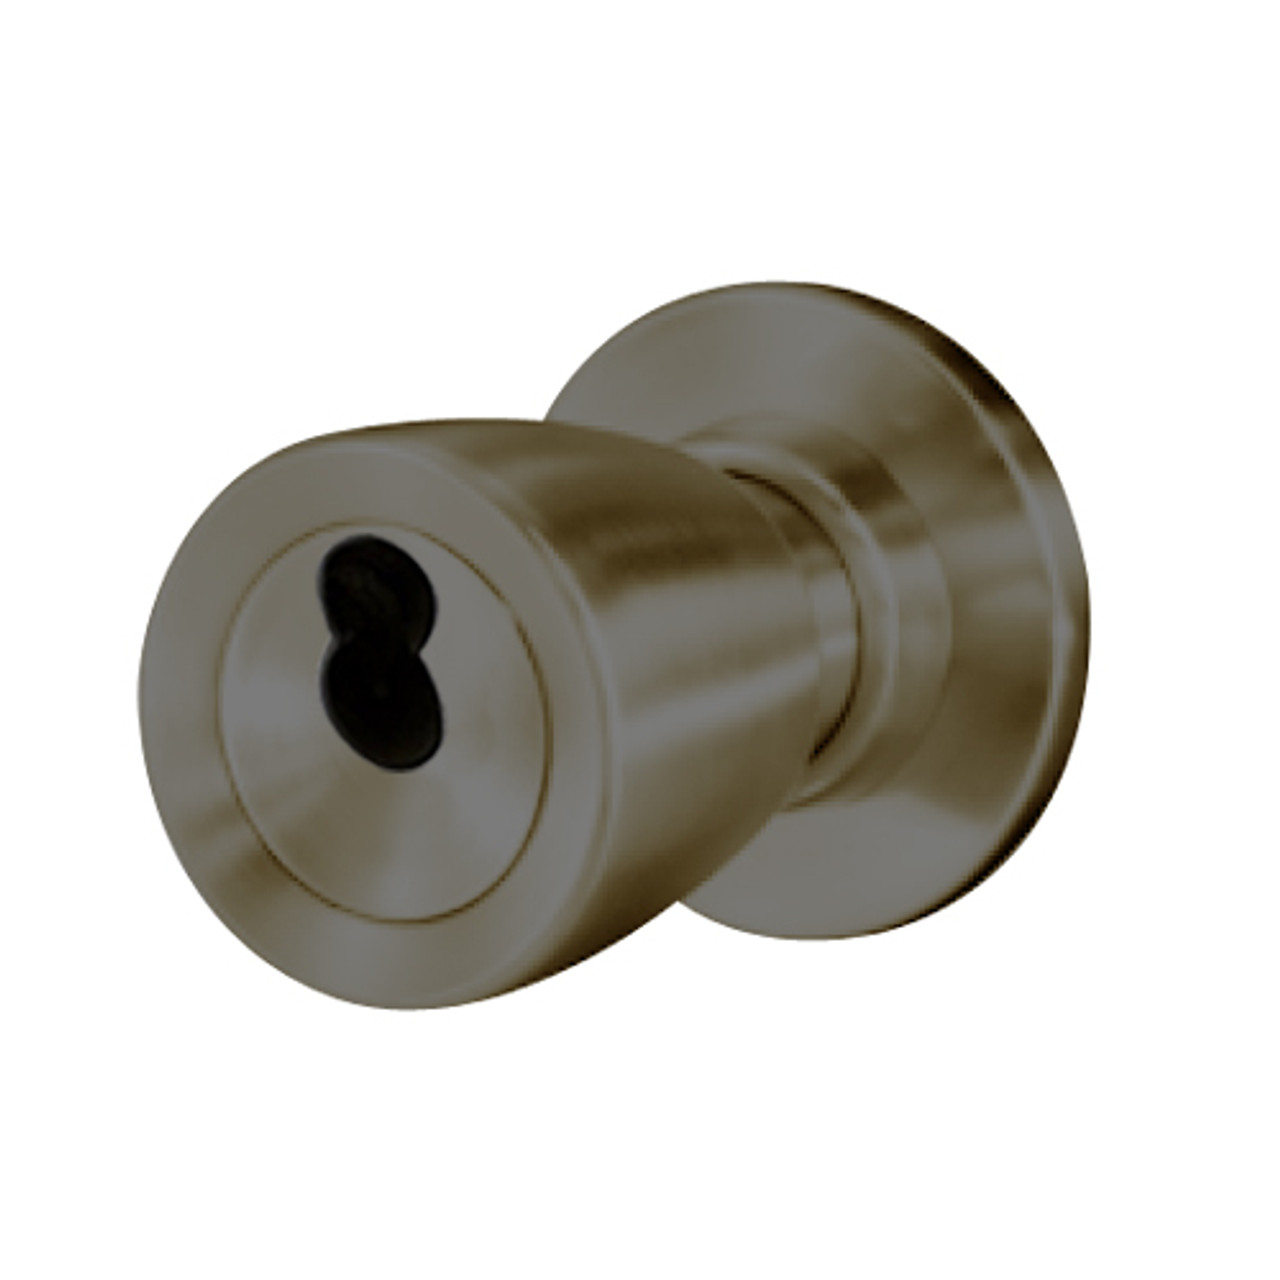 8K37D6CS3613 Best 8K Series Storeroom Heavy Duty Cylindrical Knob Locks with Tulip Style in Oil Rubbed Bronze